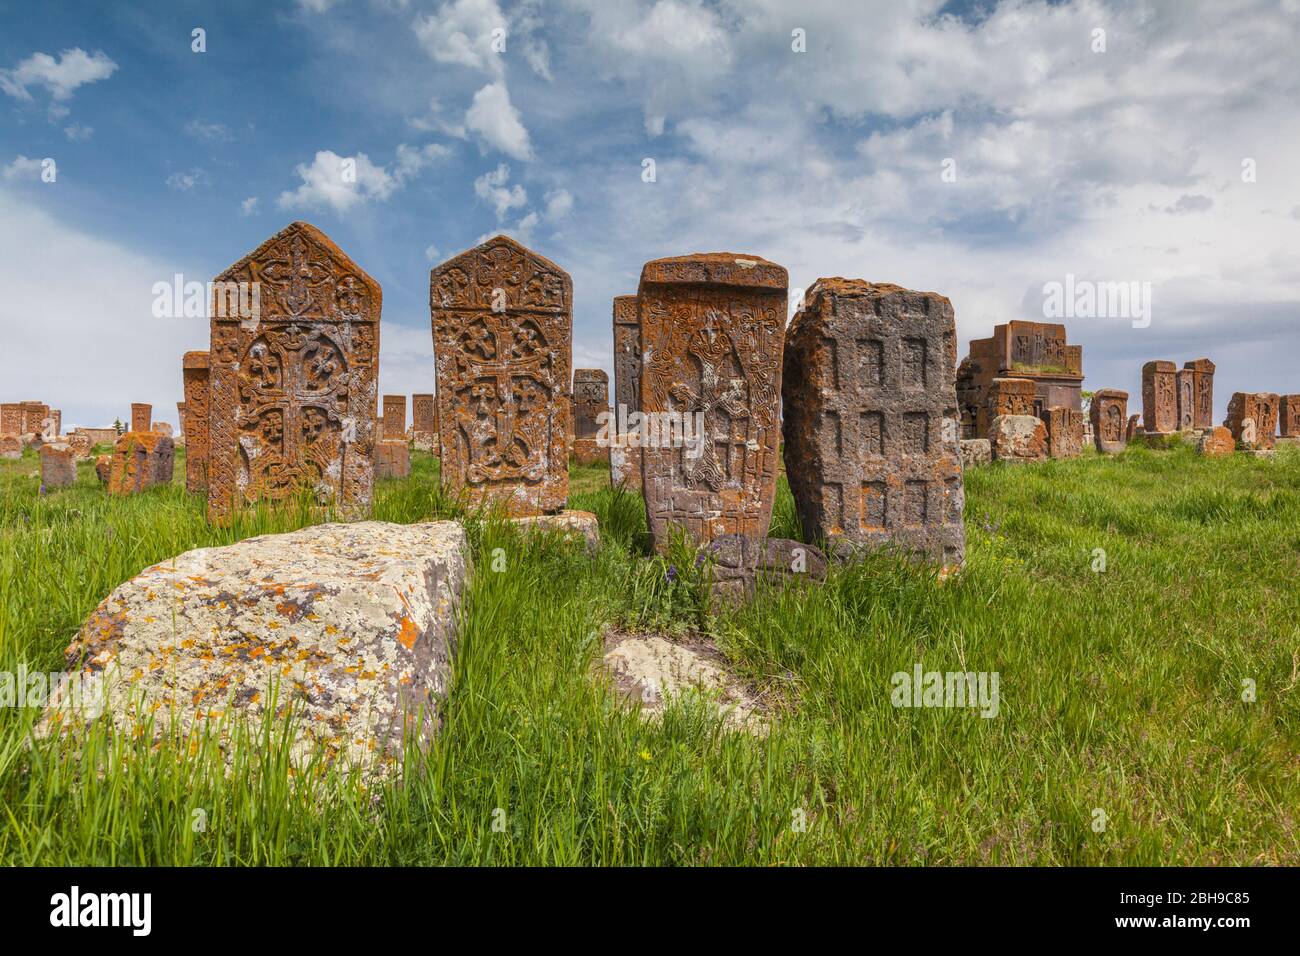 Armenia, Lake Sevan, Noratus, town cemetery, ancient khachkar monuments Stock Photo